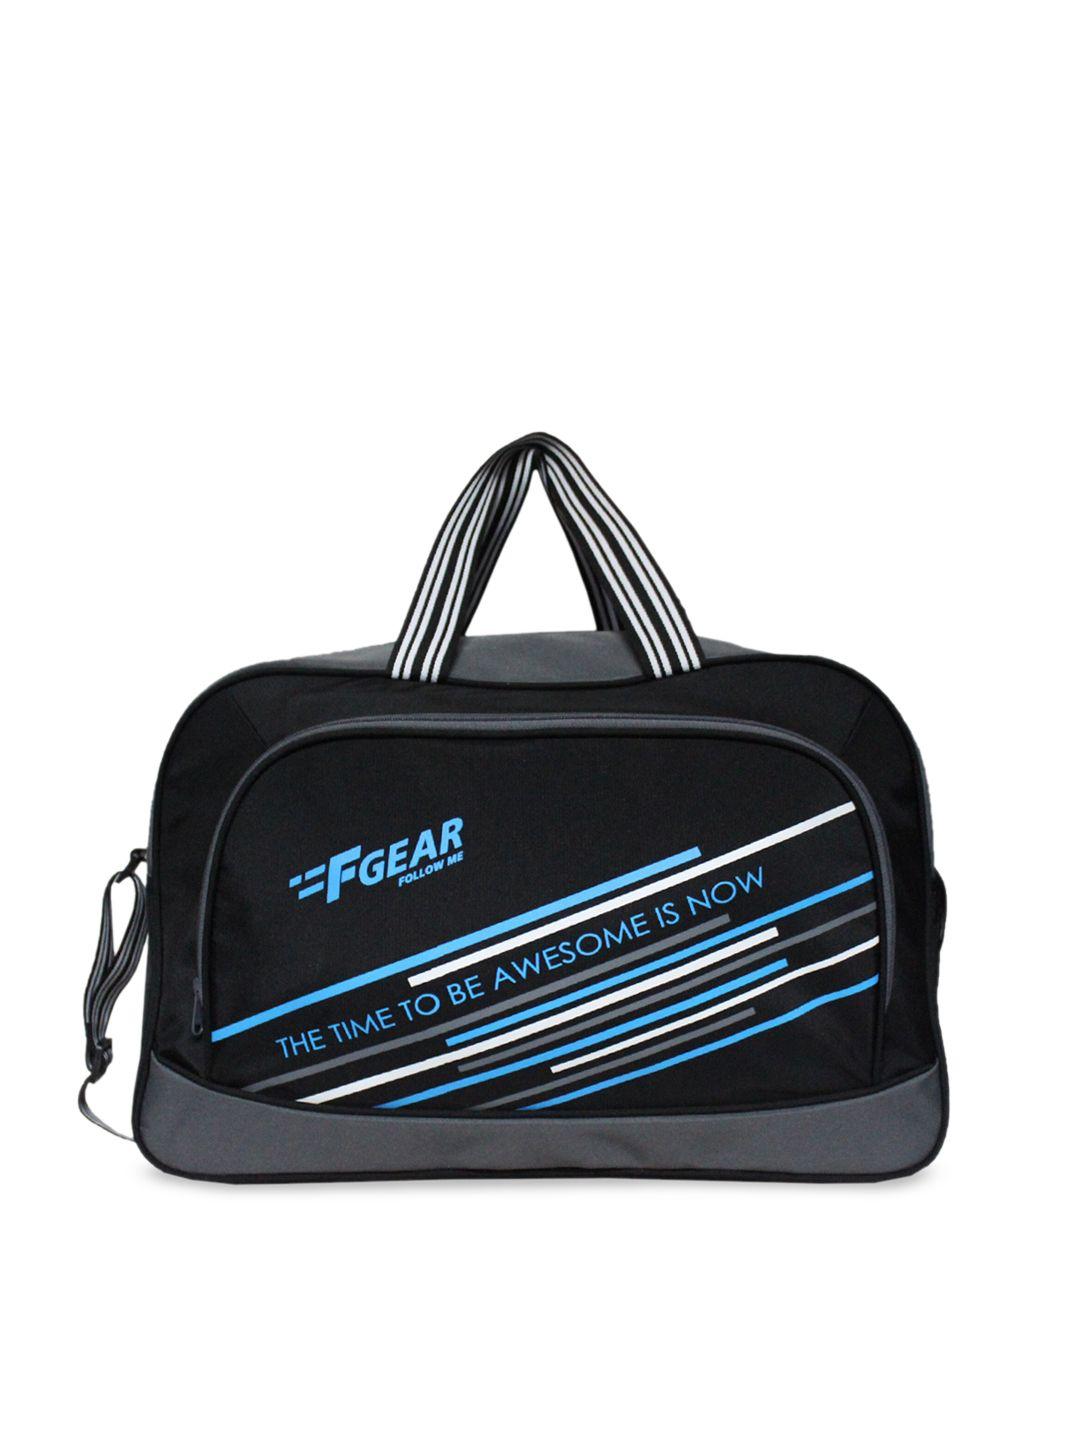 f gear black & blue printed duffle bag